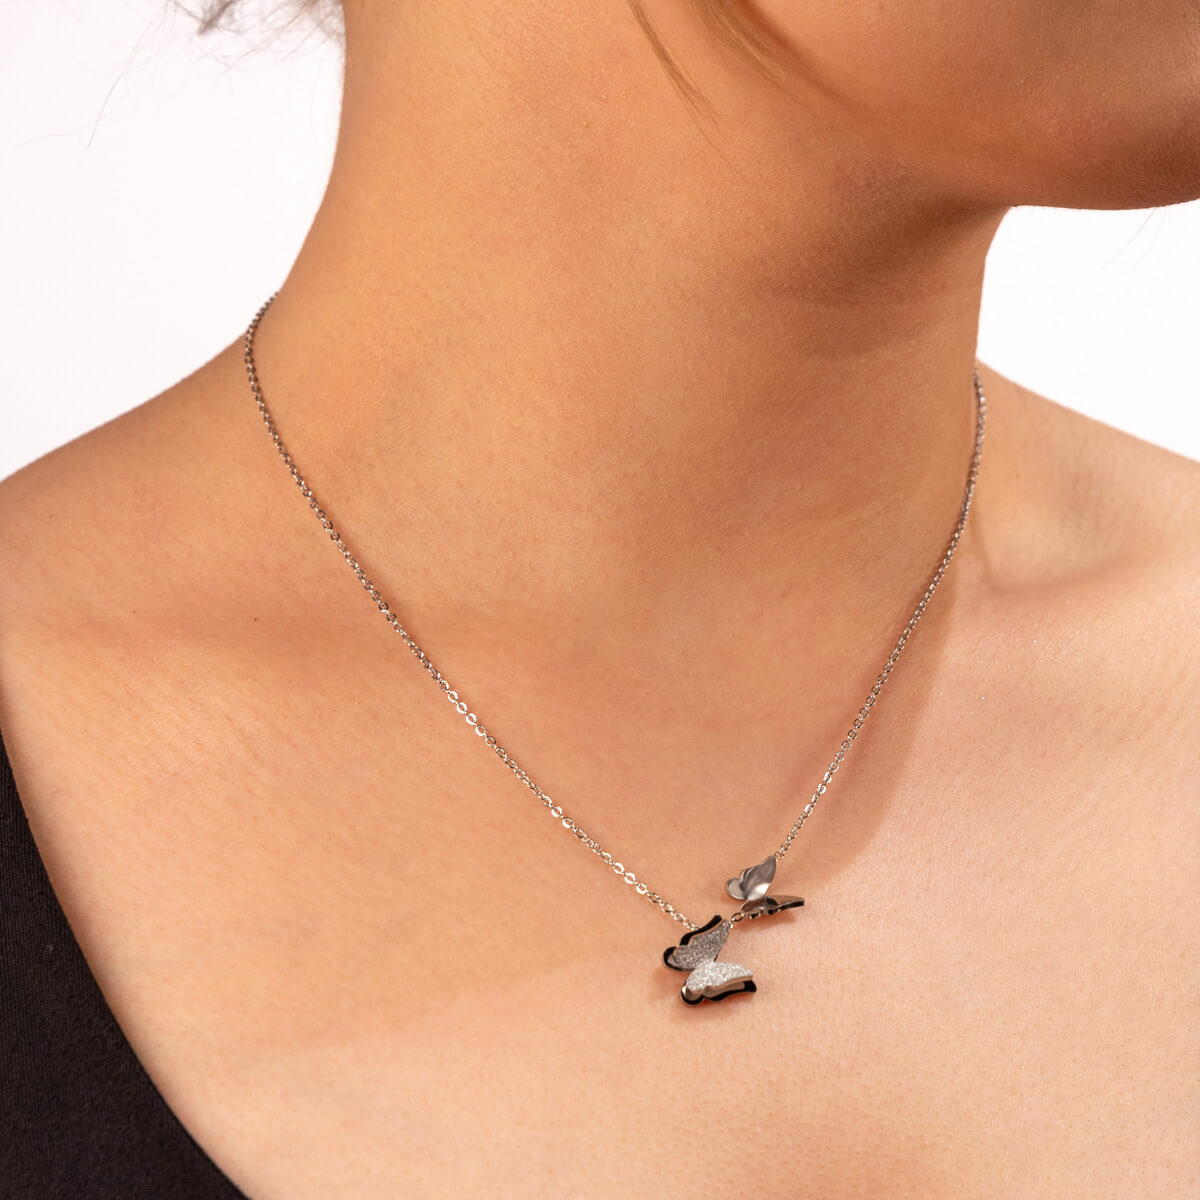 Butterfly pendant necklace 43cm +5cm (steel 316L)